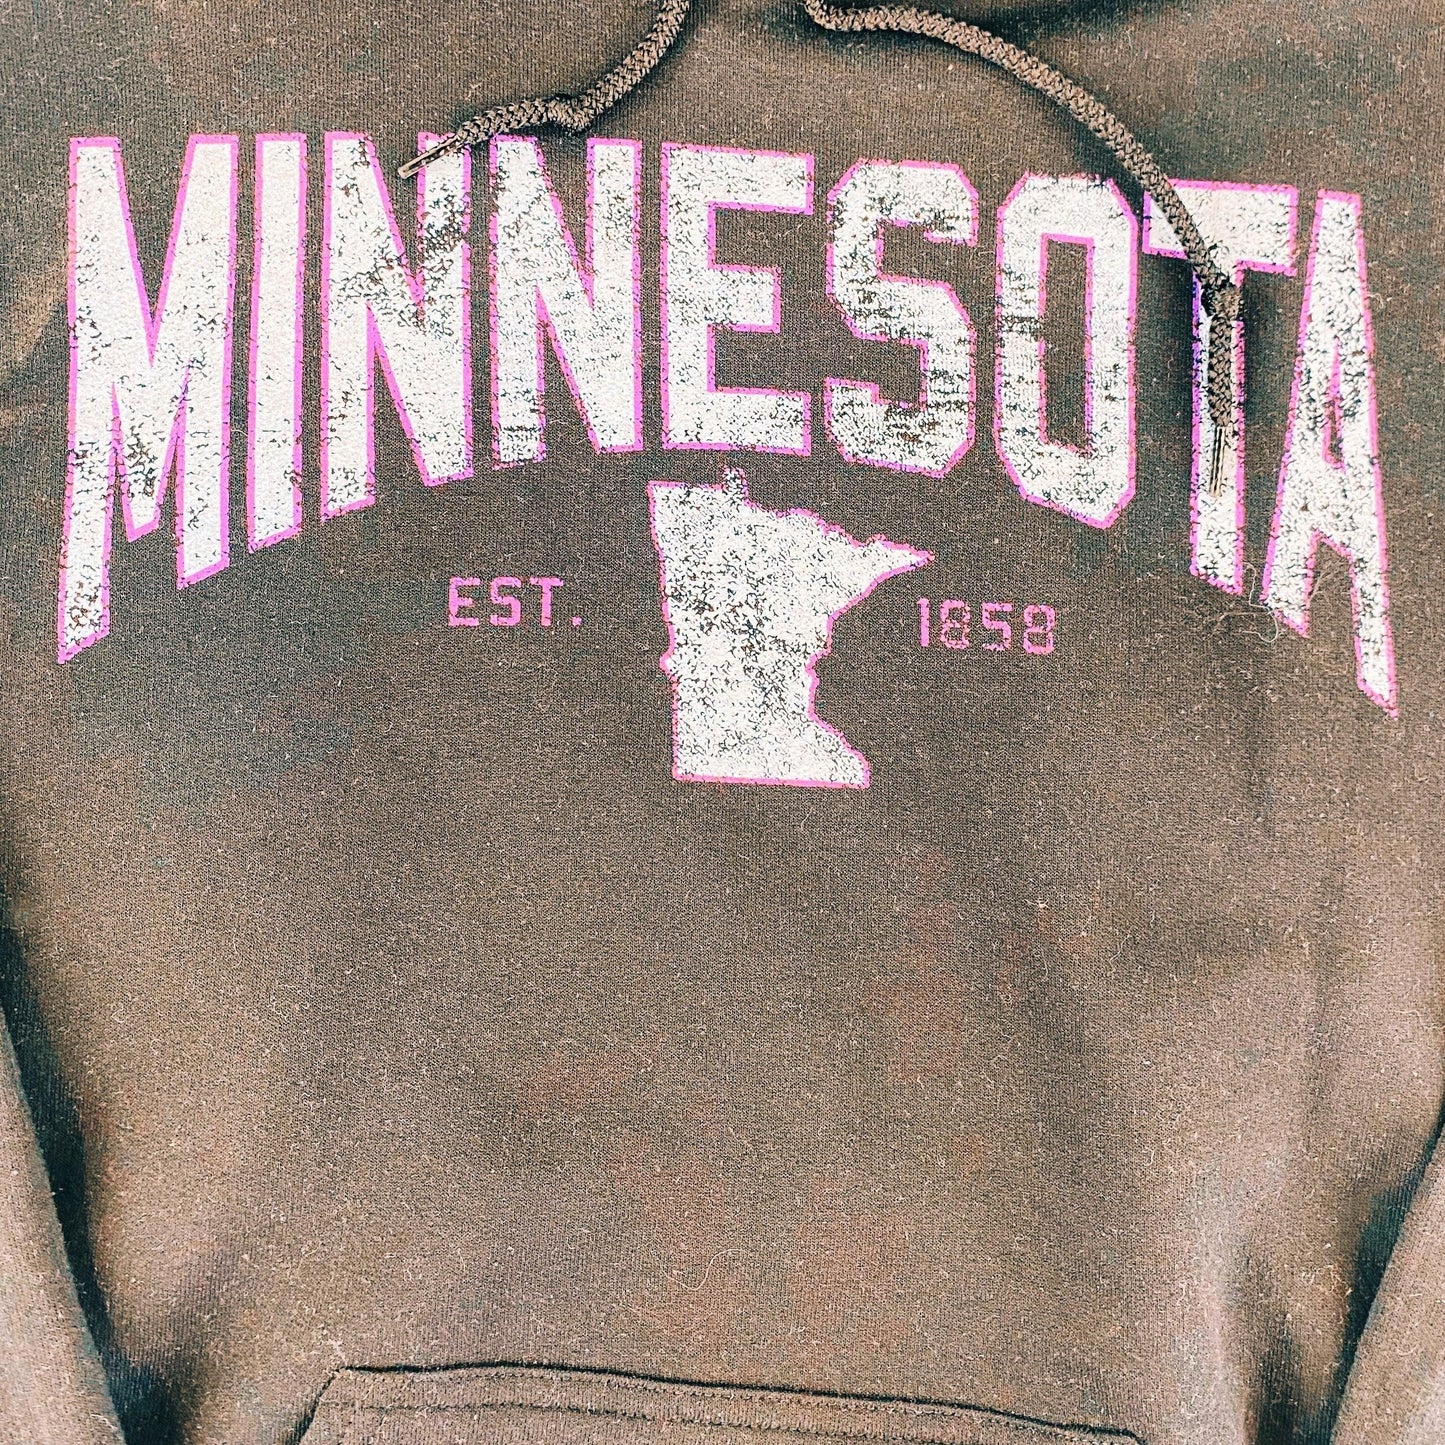 Minnesota Arch Sweatshirt - Love From USA